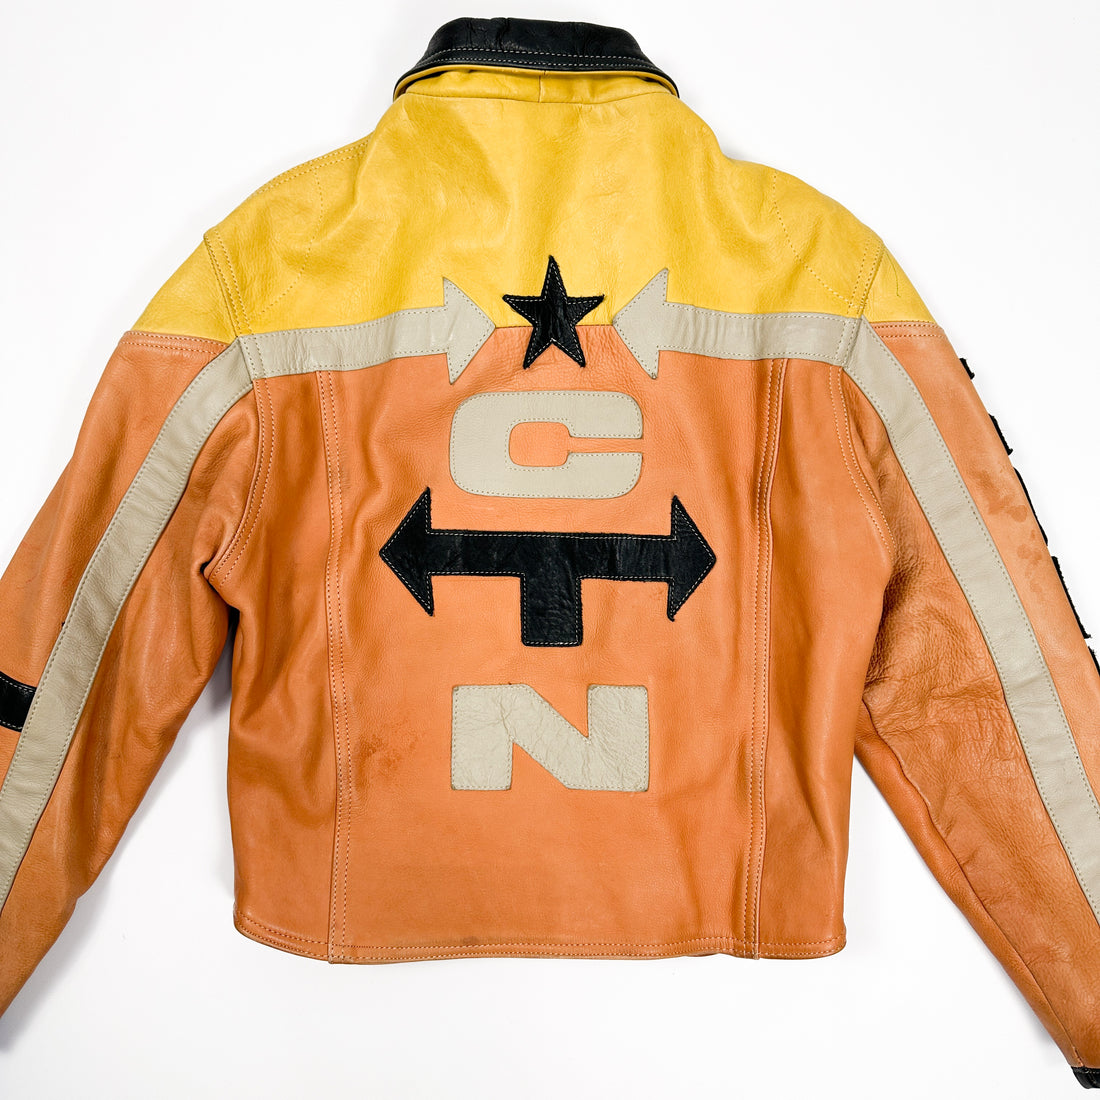 Chyston Yellow Orange Racing Jacket 1990's Vintagetts